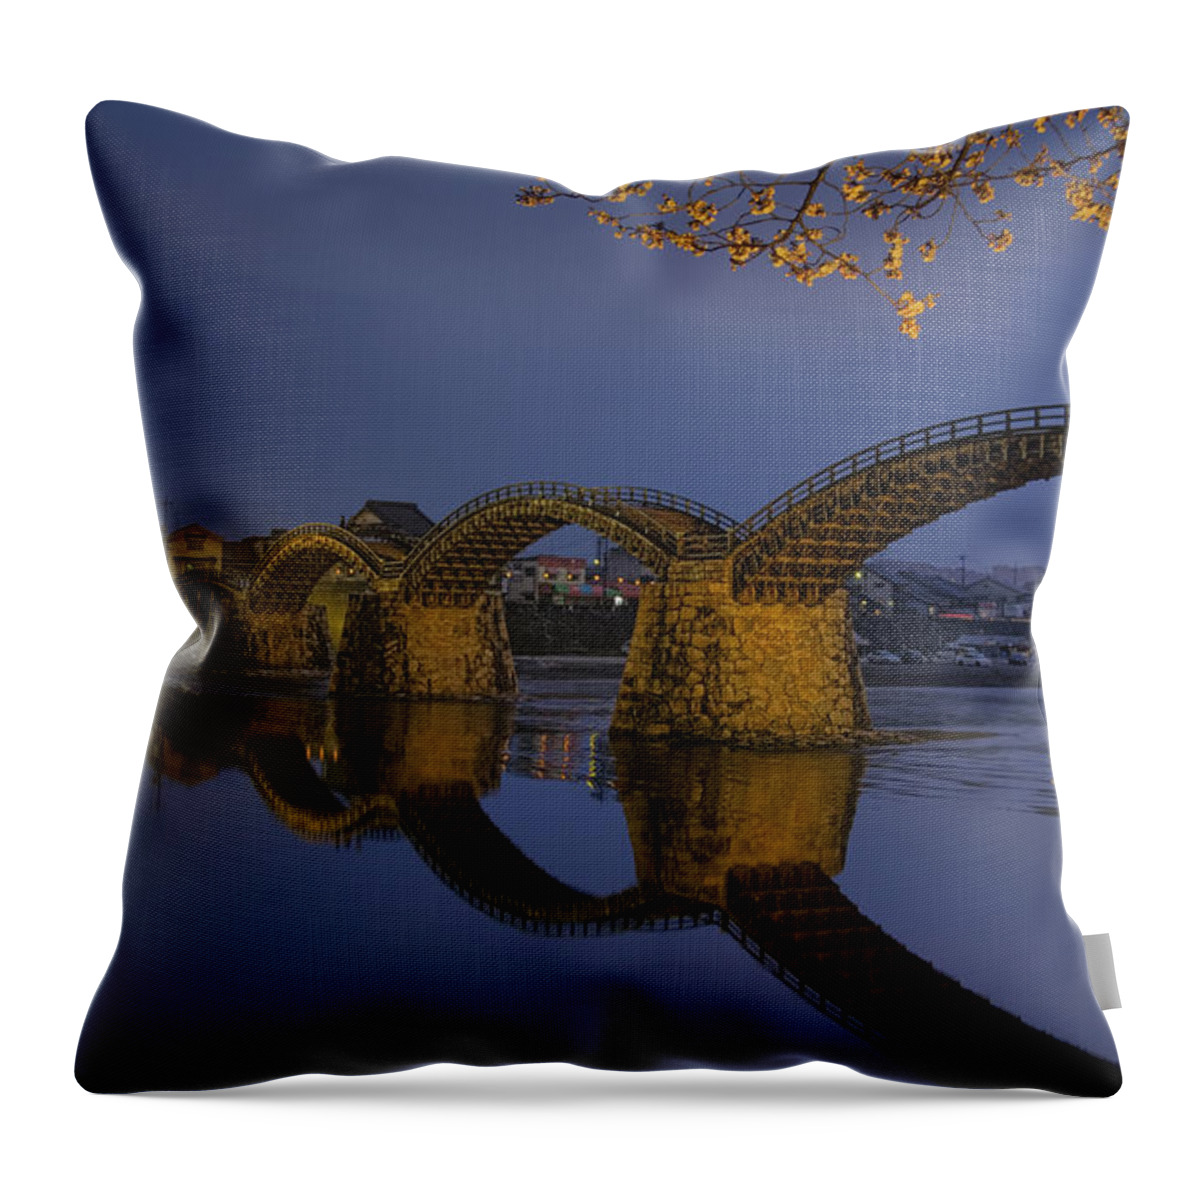 Tranquility Throw Pillow featuring the photograph Kintai Bridge In Iwakuni by Karen Walzer